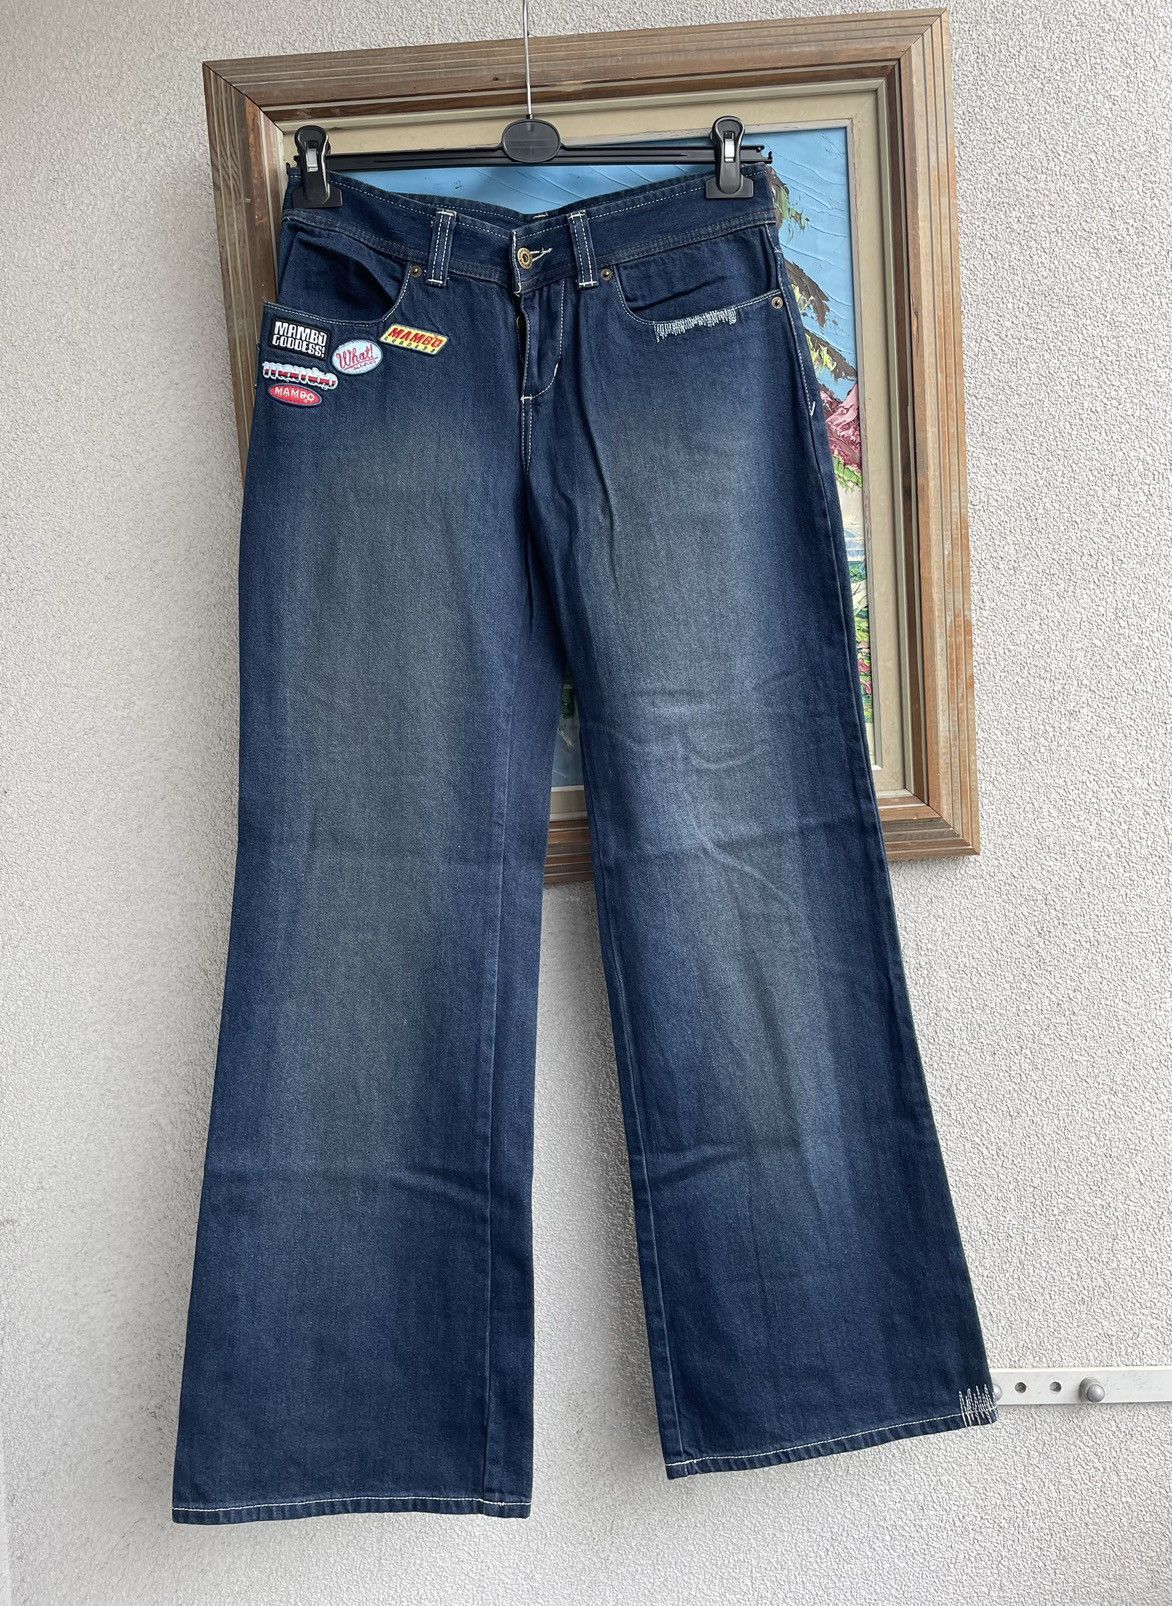 Vintage Vintage 90s MAMBO Australia Denim Jeans Rare Streetwear Hype Size US 30 / EU 46 - 1 Preview